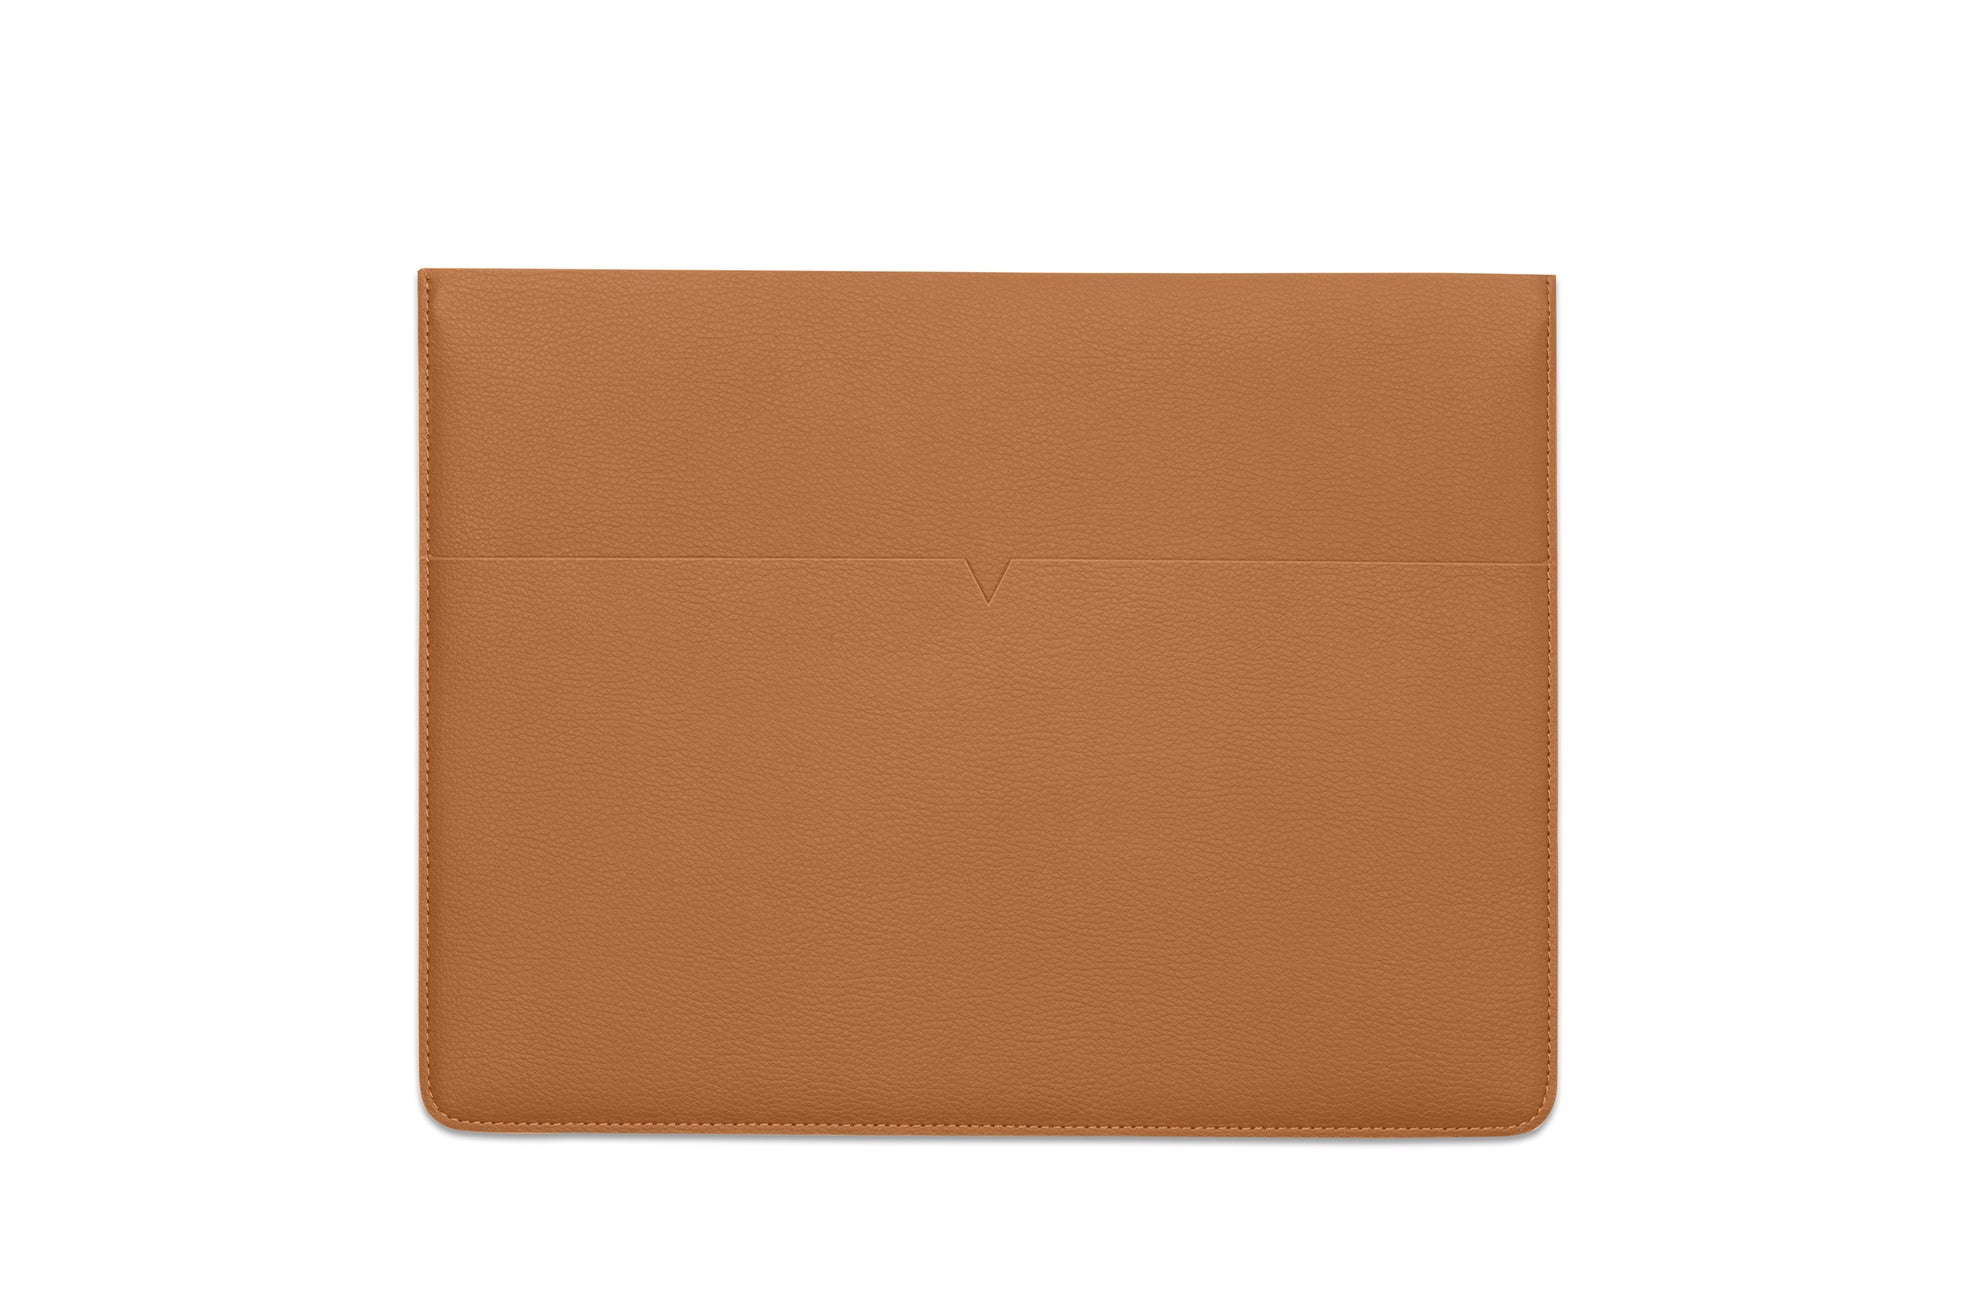 The MacBook Sleeve 13-inch - Sample Sale in Technik-Leather in Caramel image 1